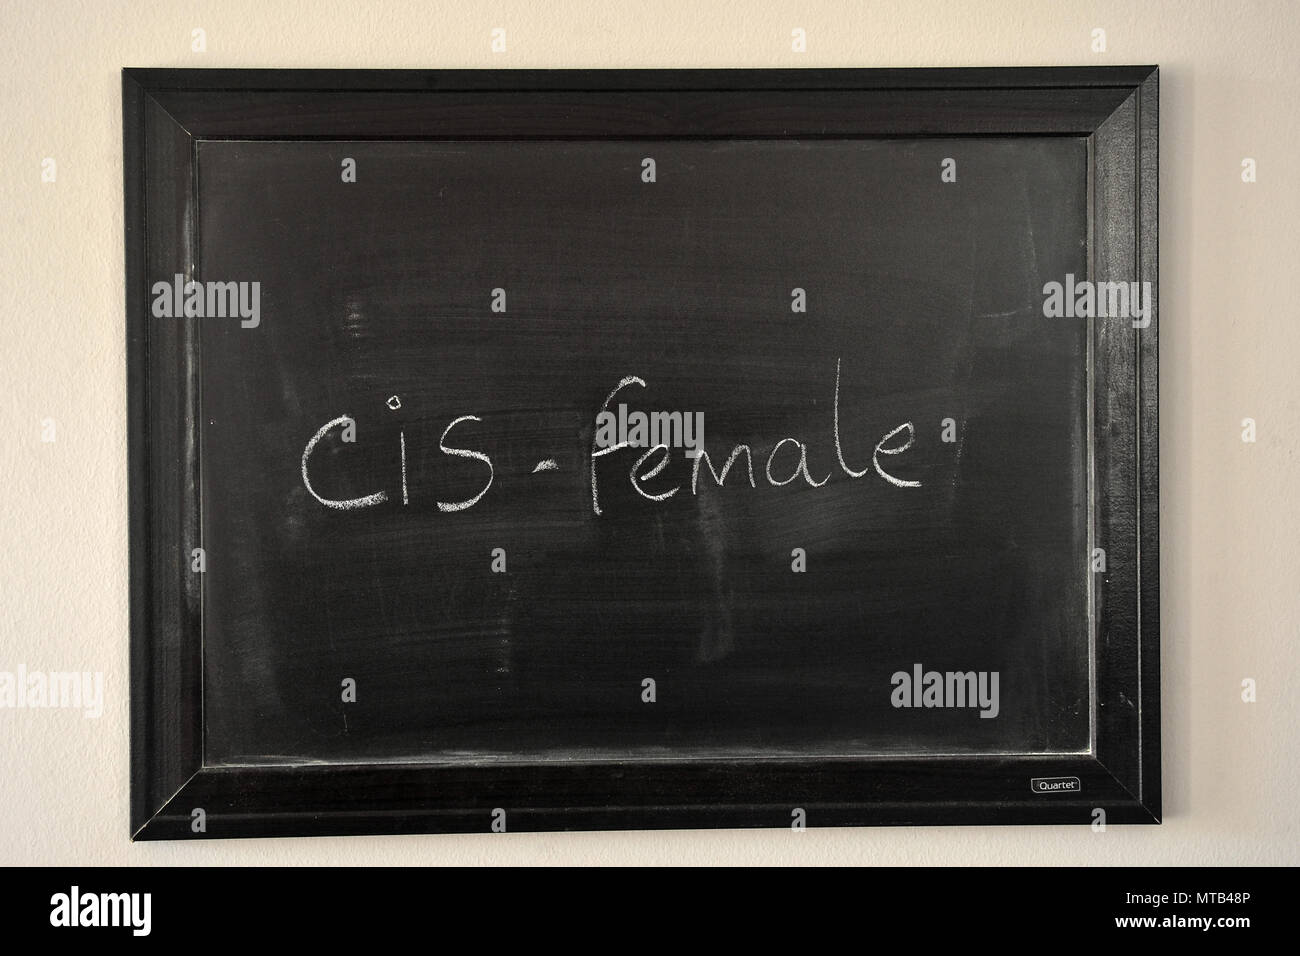 cis female written in a white chalk on a wall mounted blackboard Stock Photo